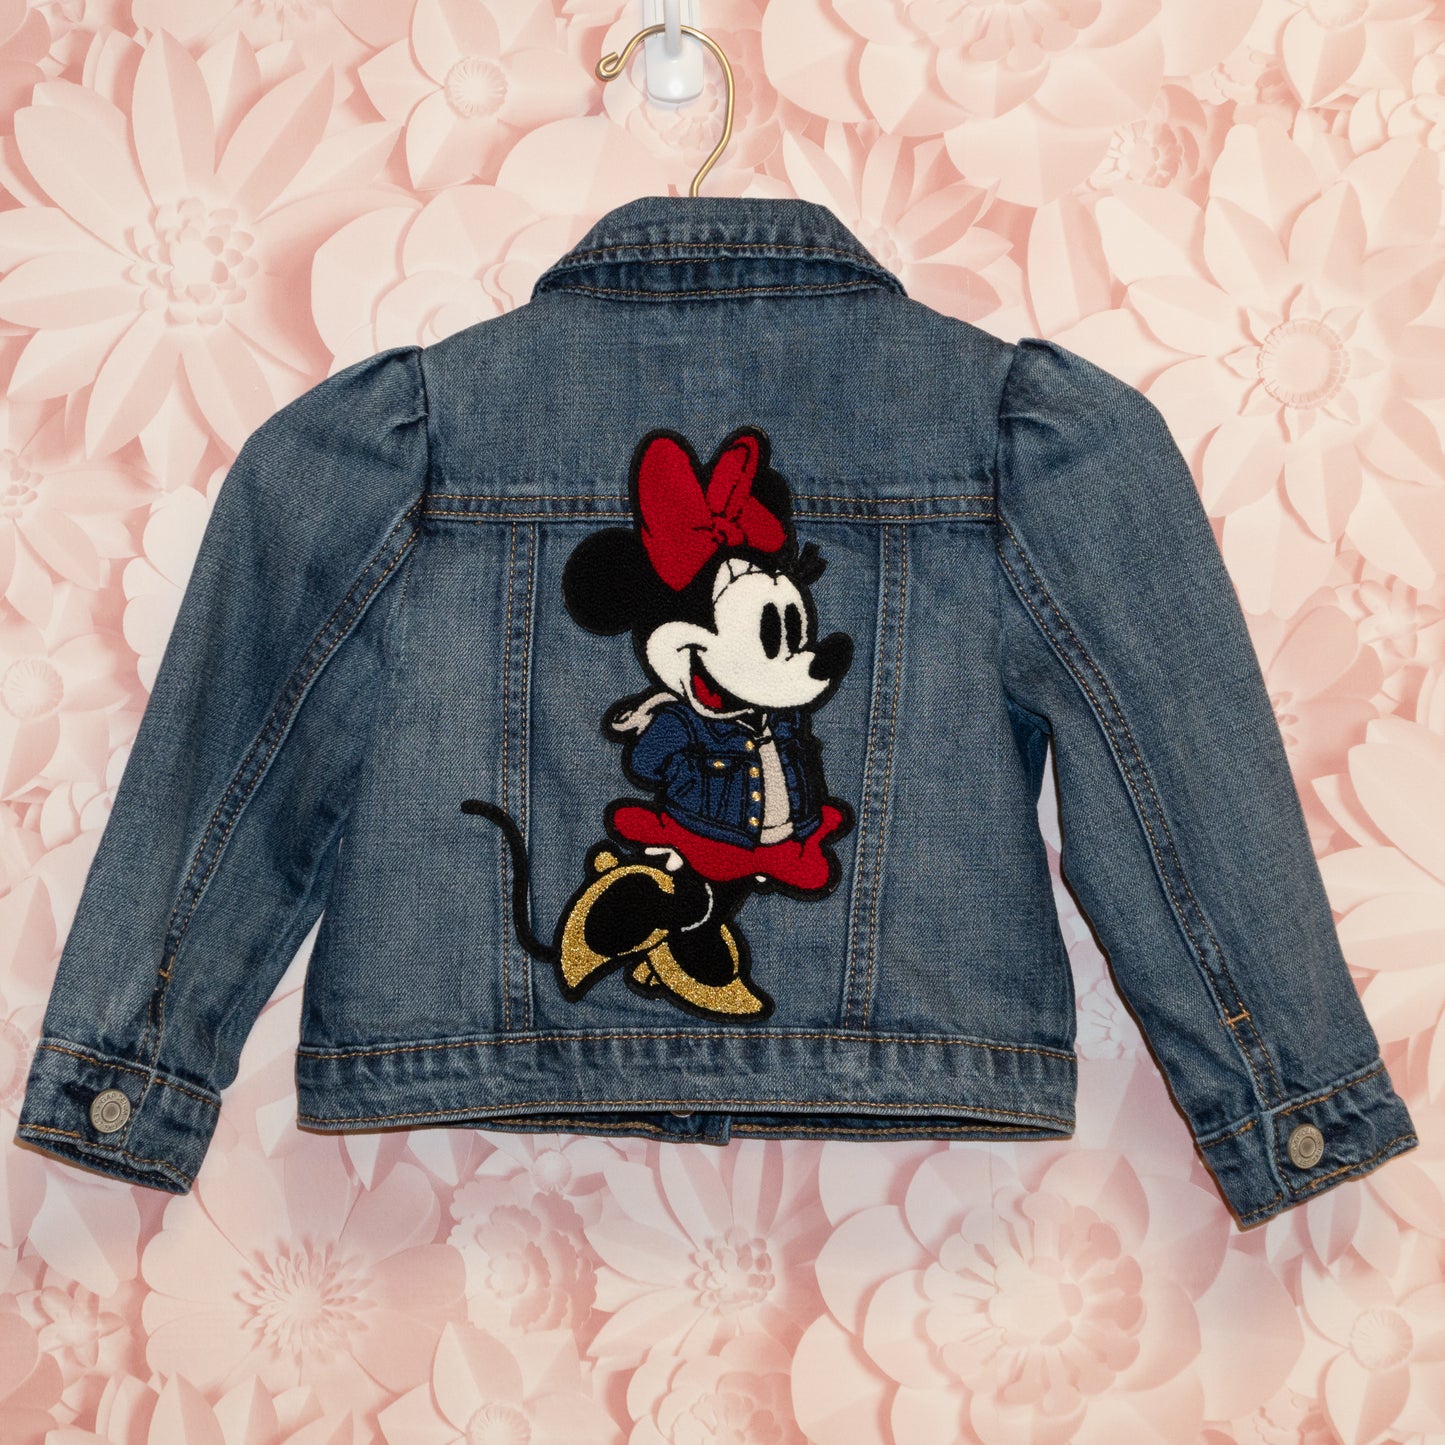 Minnie Mouse Jean Jacket Size 3T